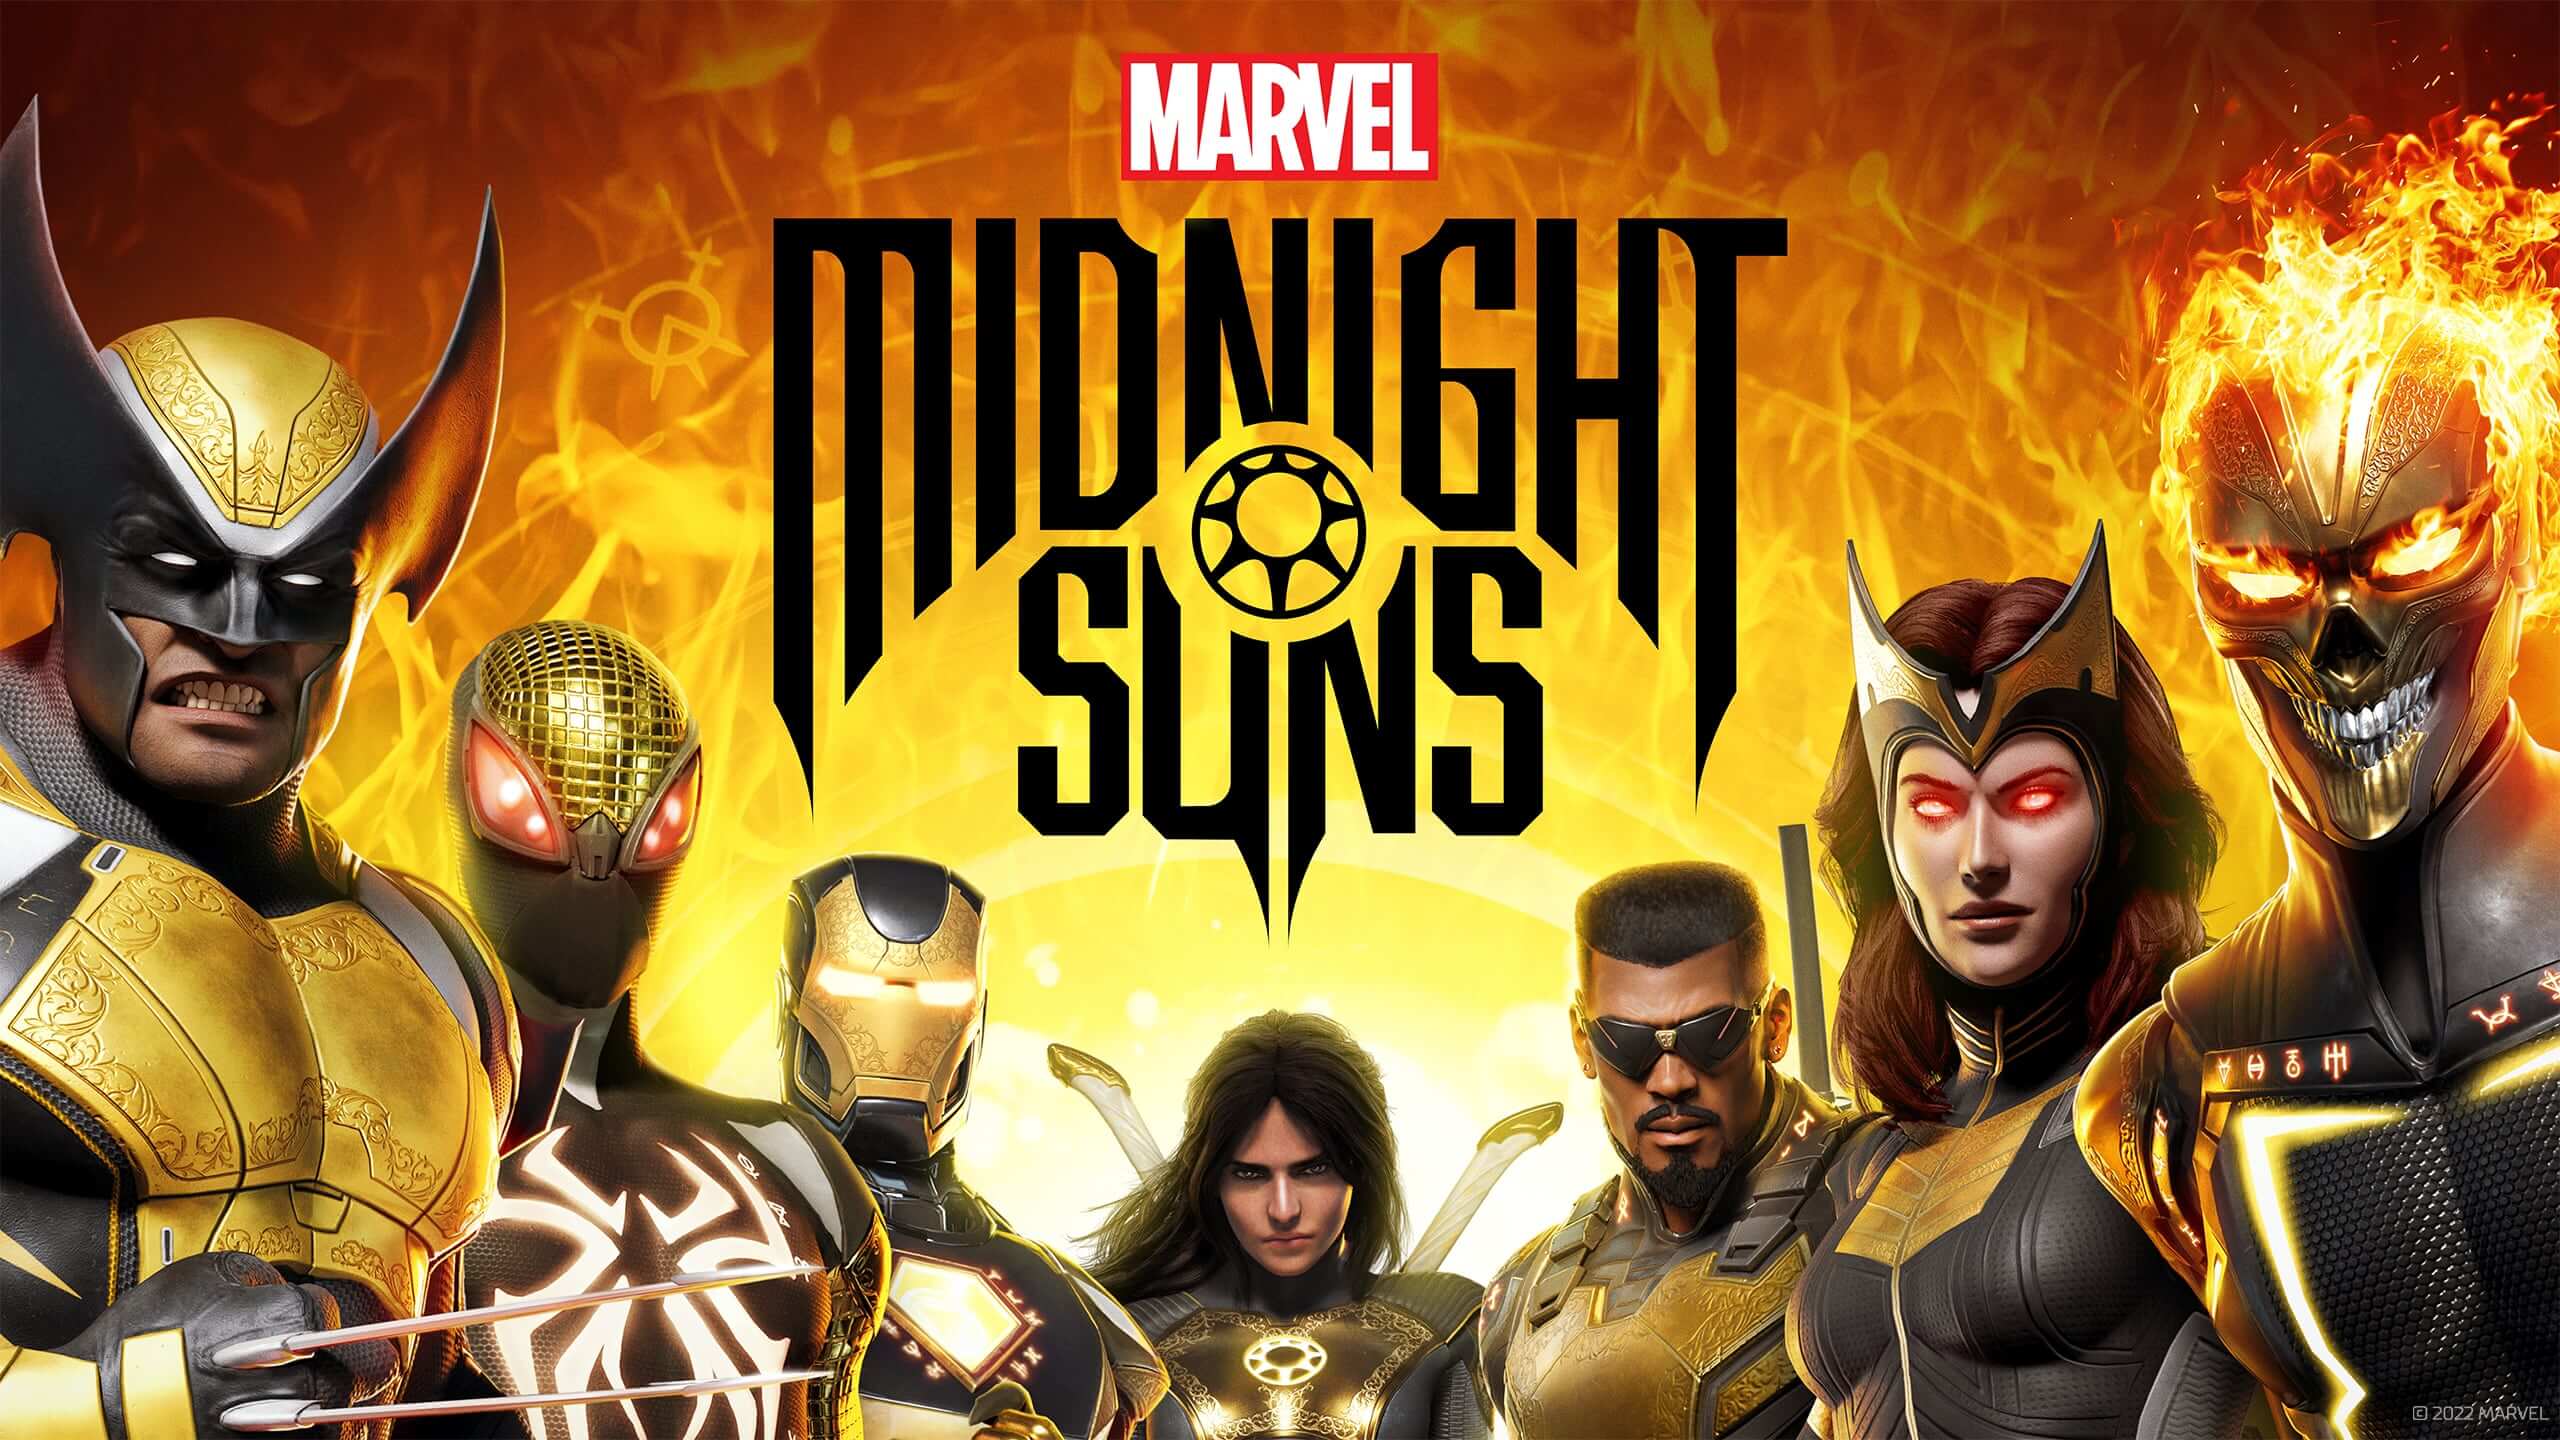 New Marvel Midnight Sun gameplay footage - My Nintendo News